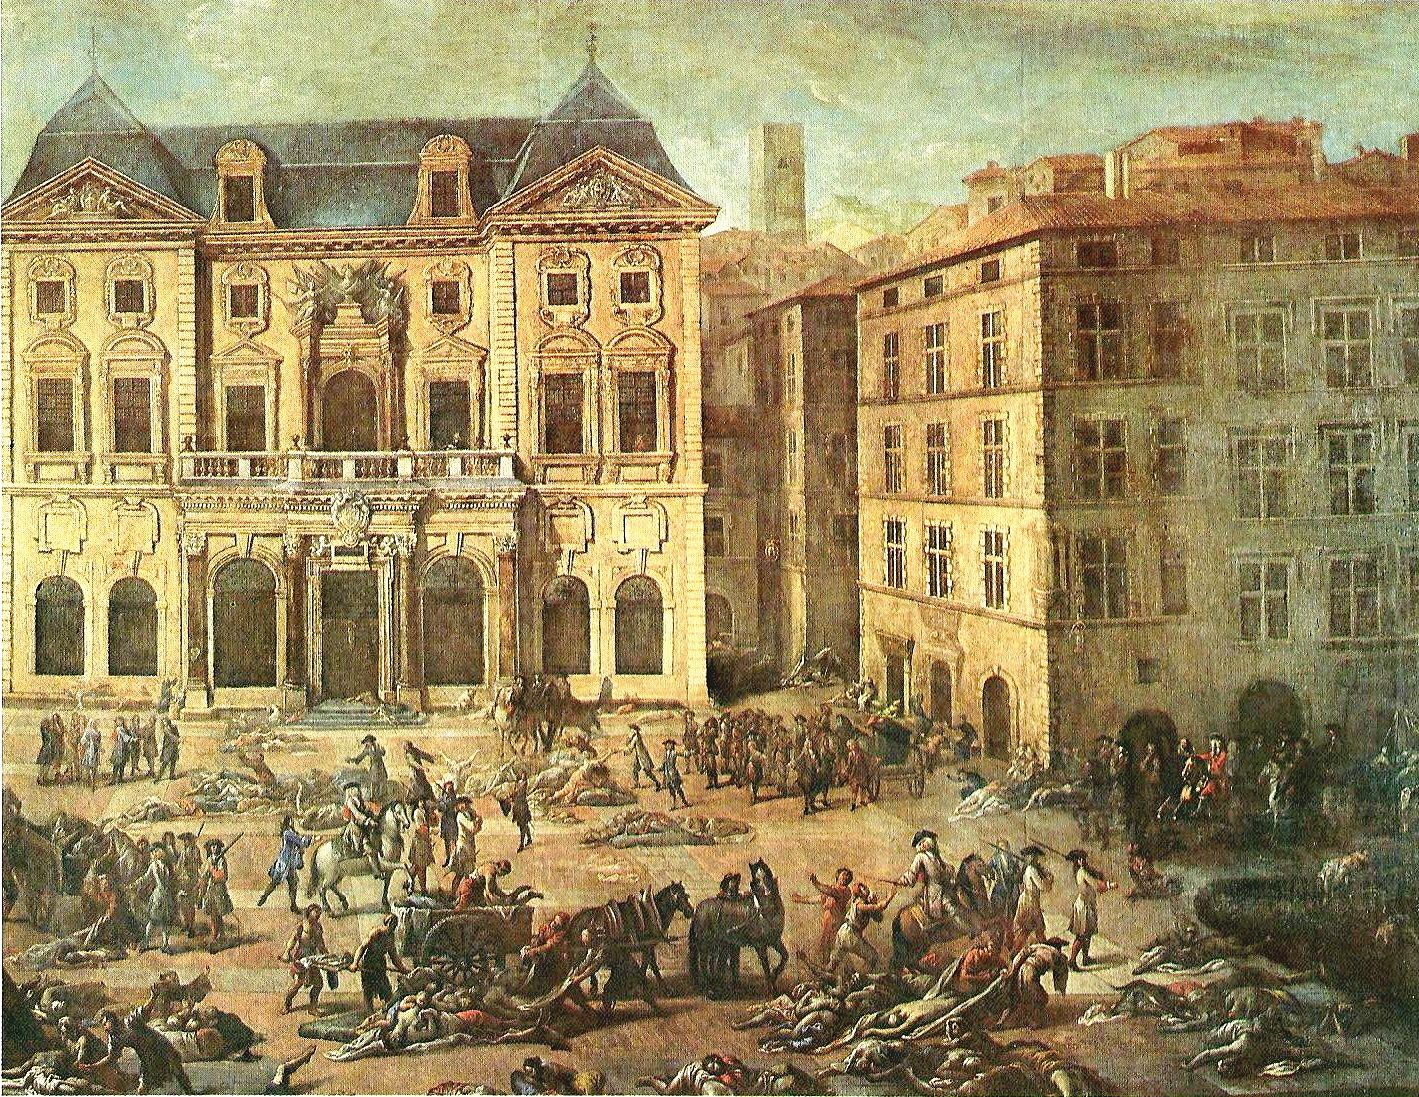 tableau-de-michel-serre-1658-1733-représentant-lhôtel-de-ville-de-marseille-pendant-la-peste-de-1720.